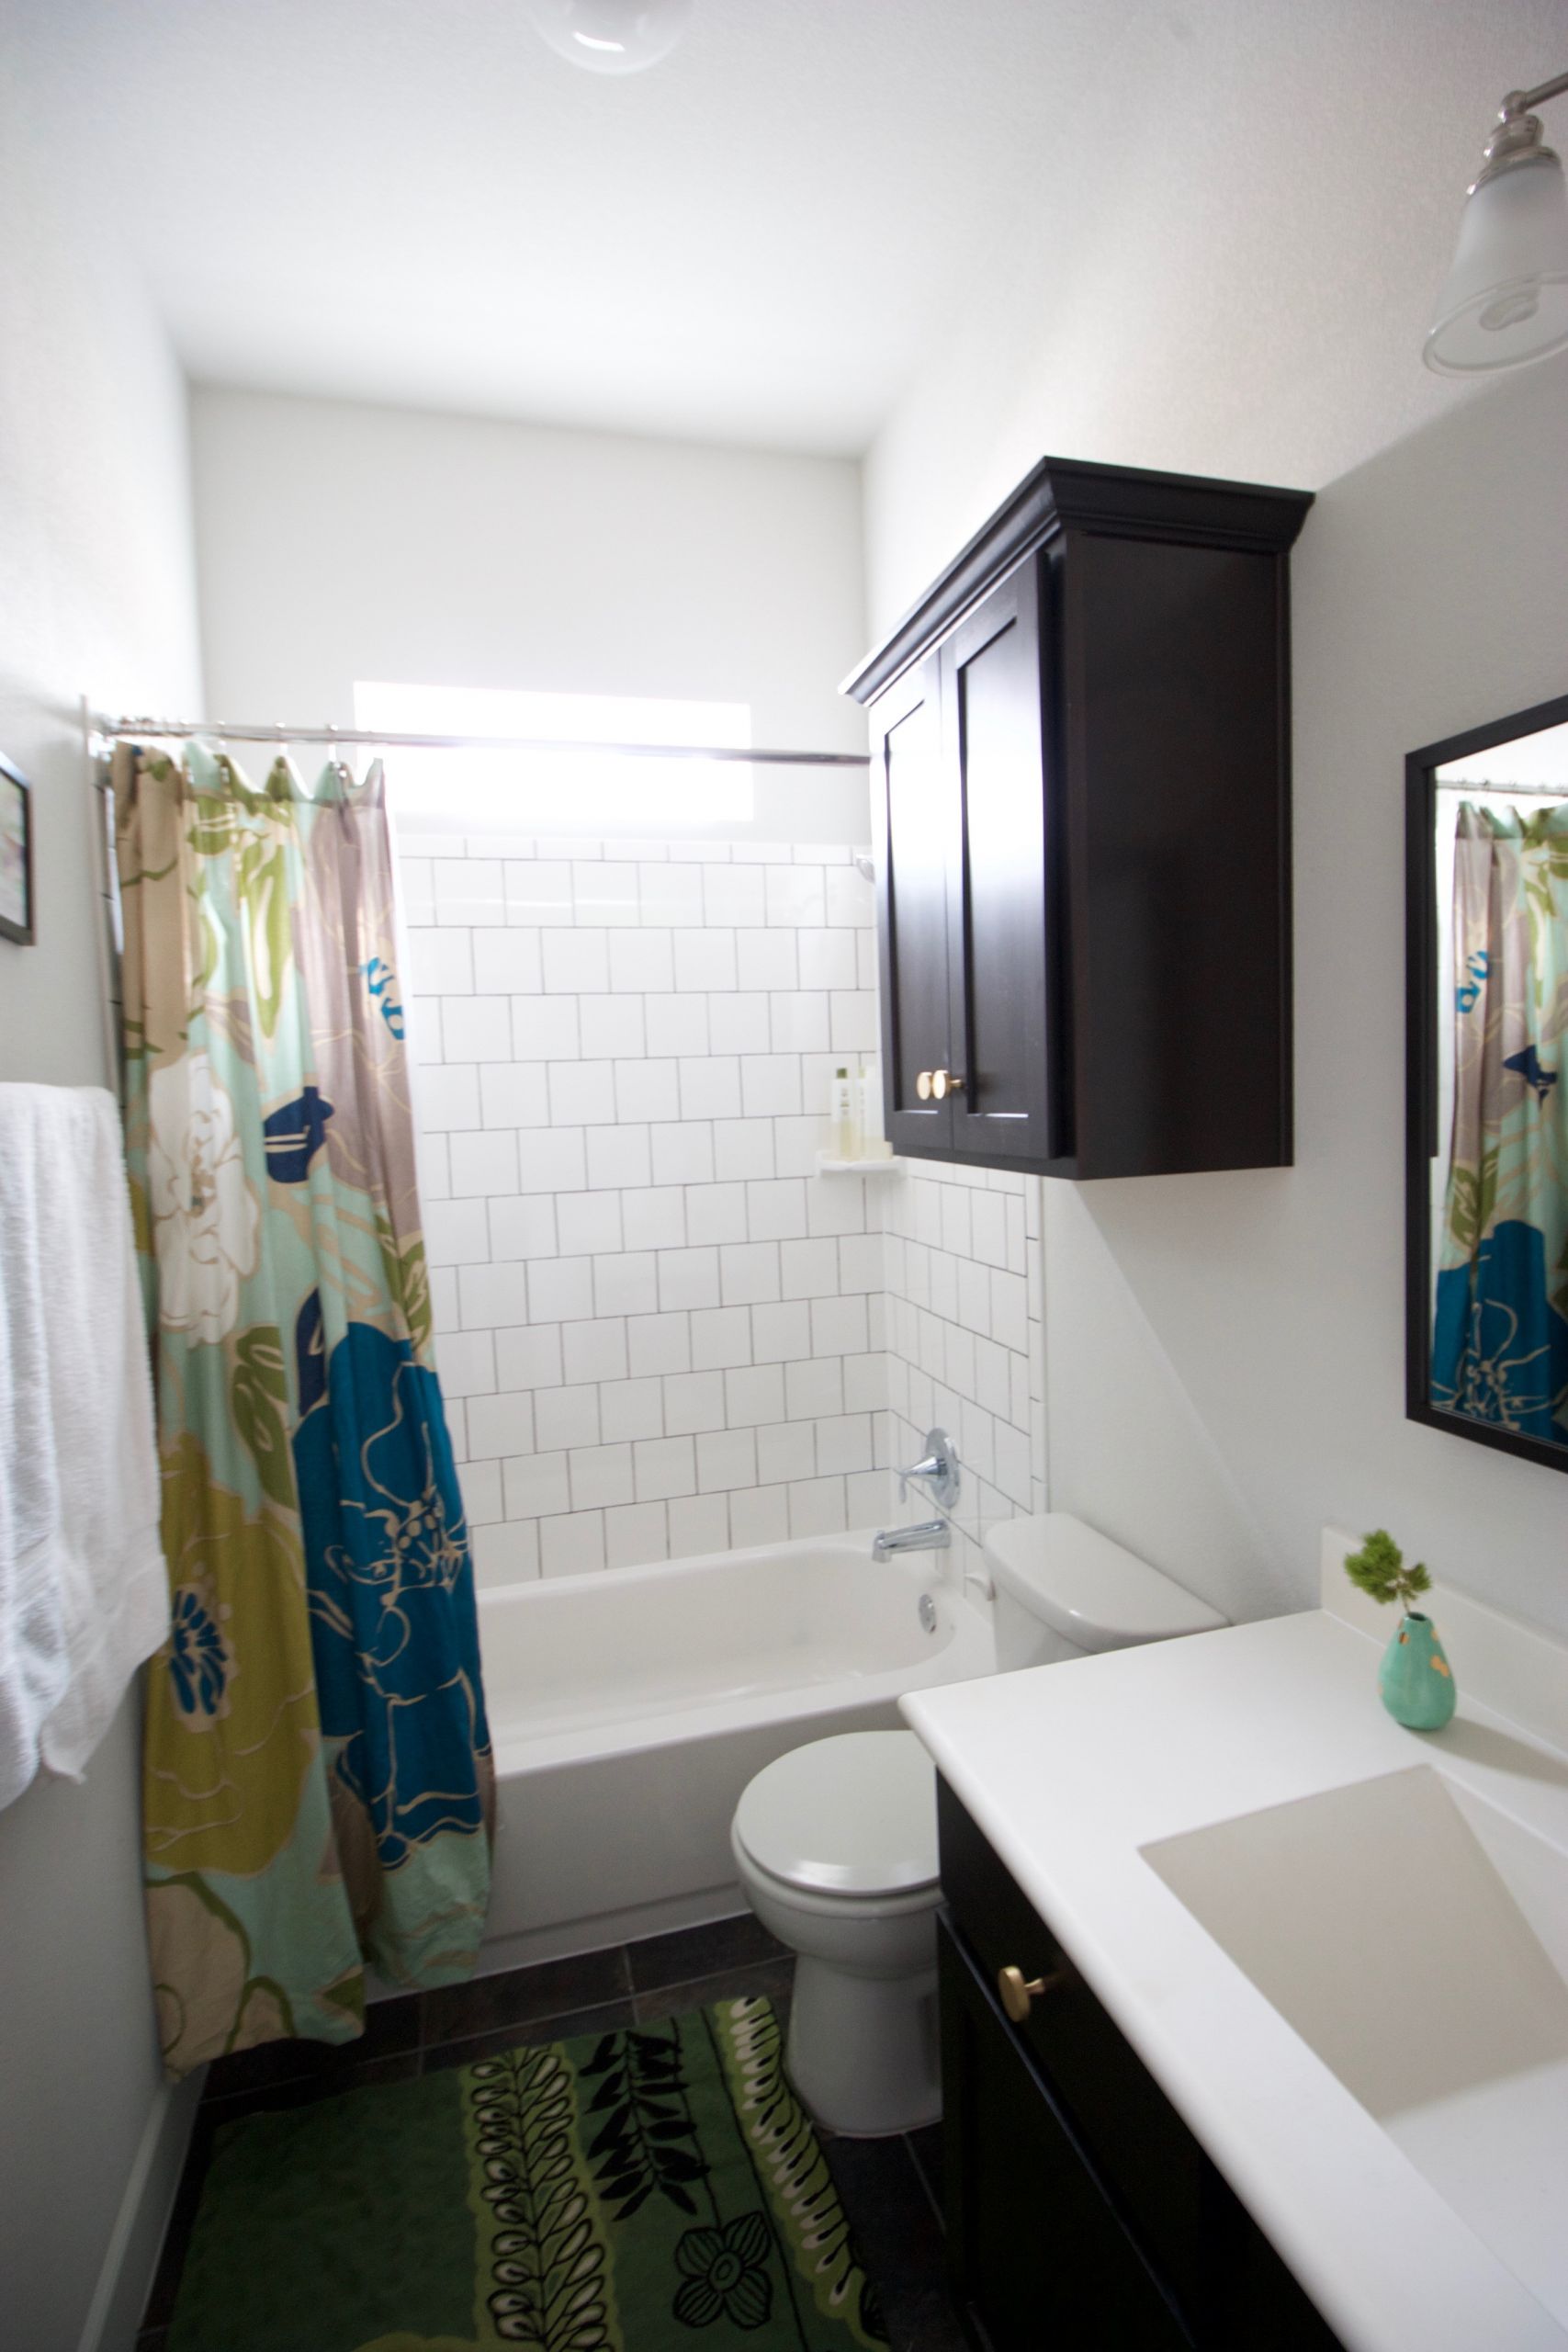 Textured Bathroom Wallpaper
 Jackalope Wallpaper Bathroom DIY Smooth Textured Walls